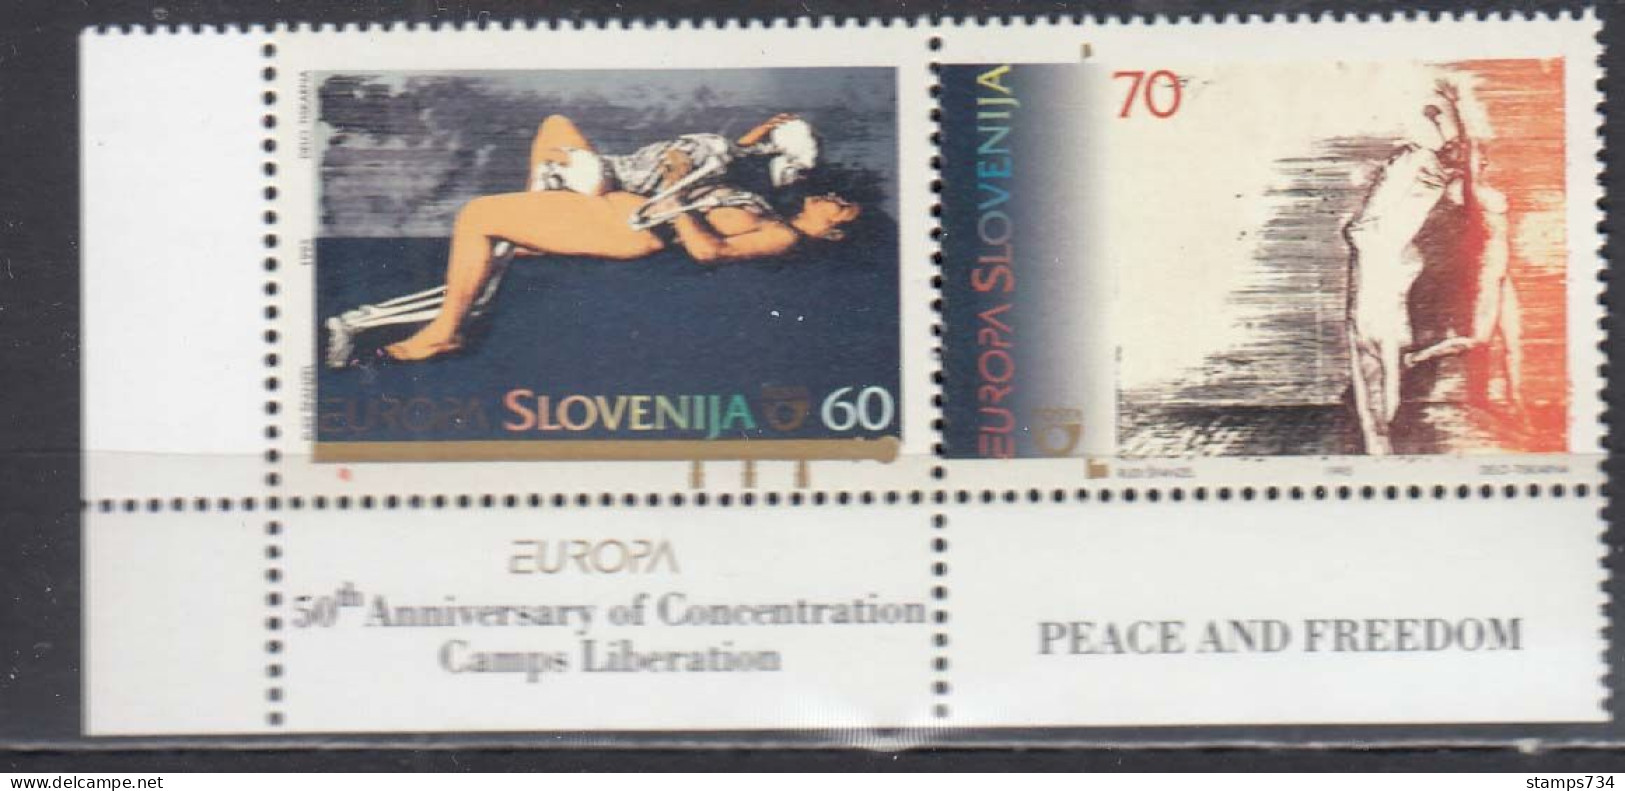 Slovenia 1995 - EUROPA, Mi-Nr. 110/11, MNH** - 1995